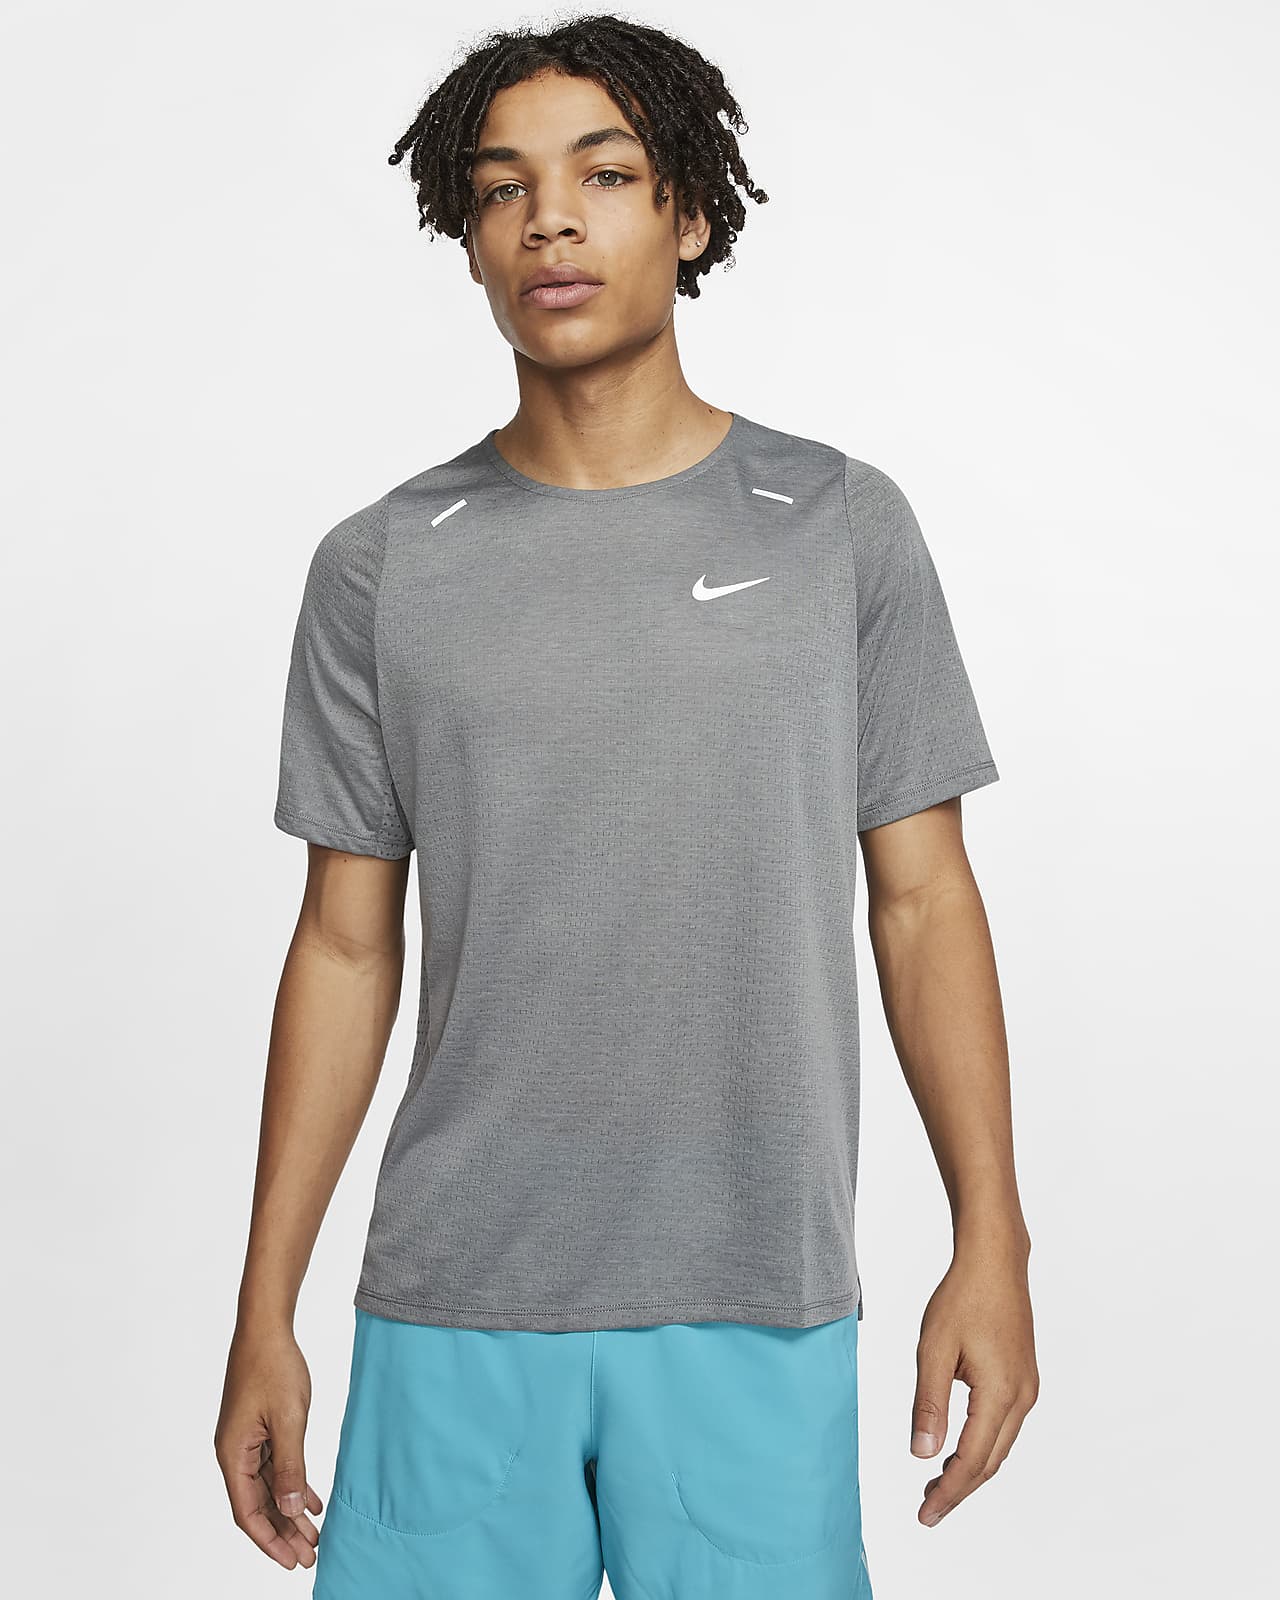 365 Men's Running Top. Nike.com